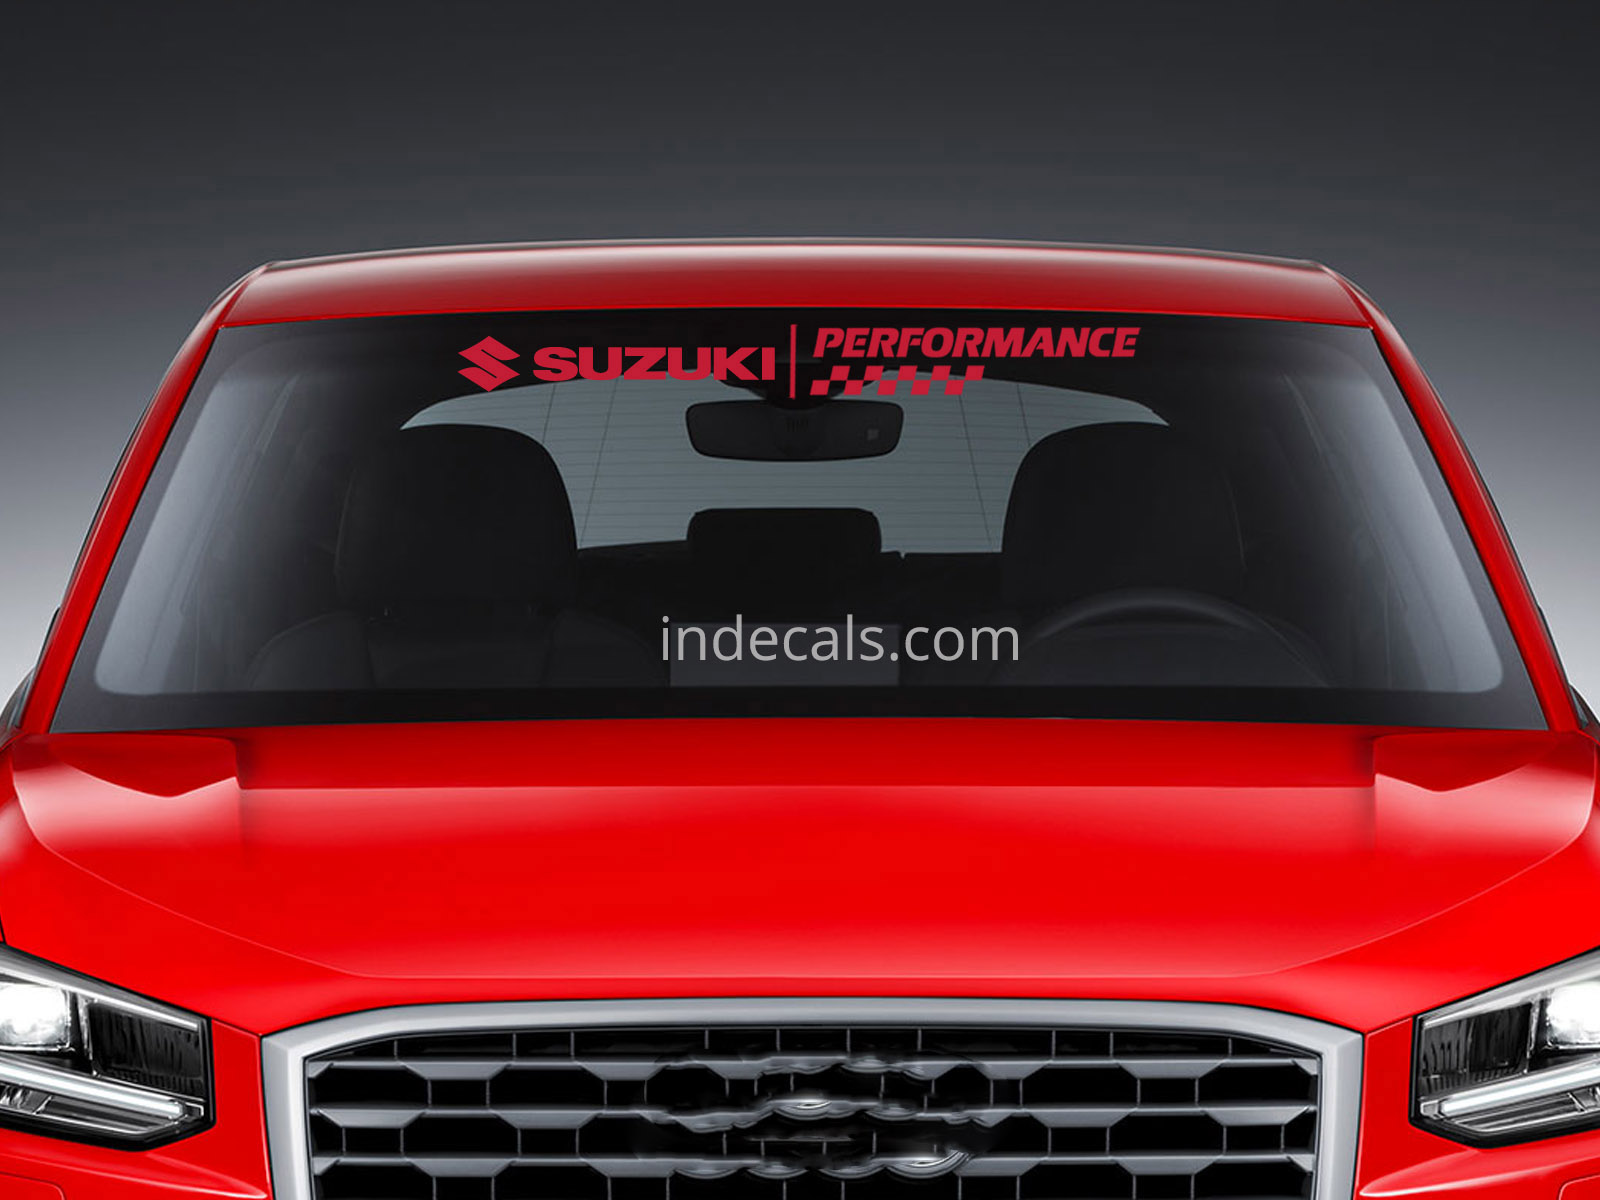 1 x Suzuki Performance Sticker for Windshield or Back Window - Red